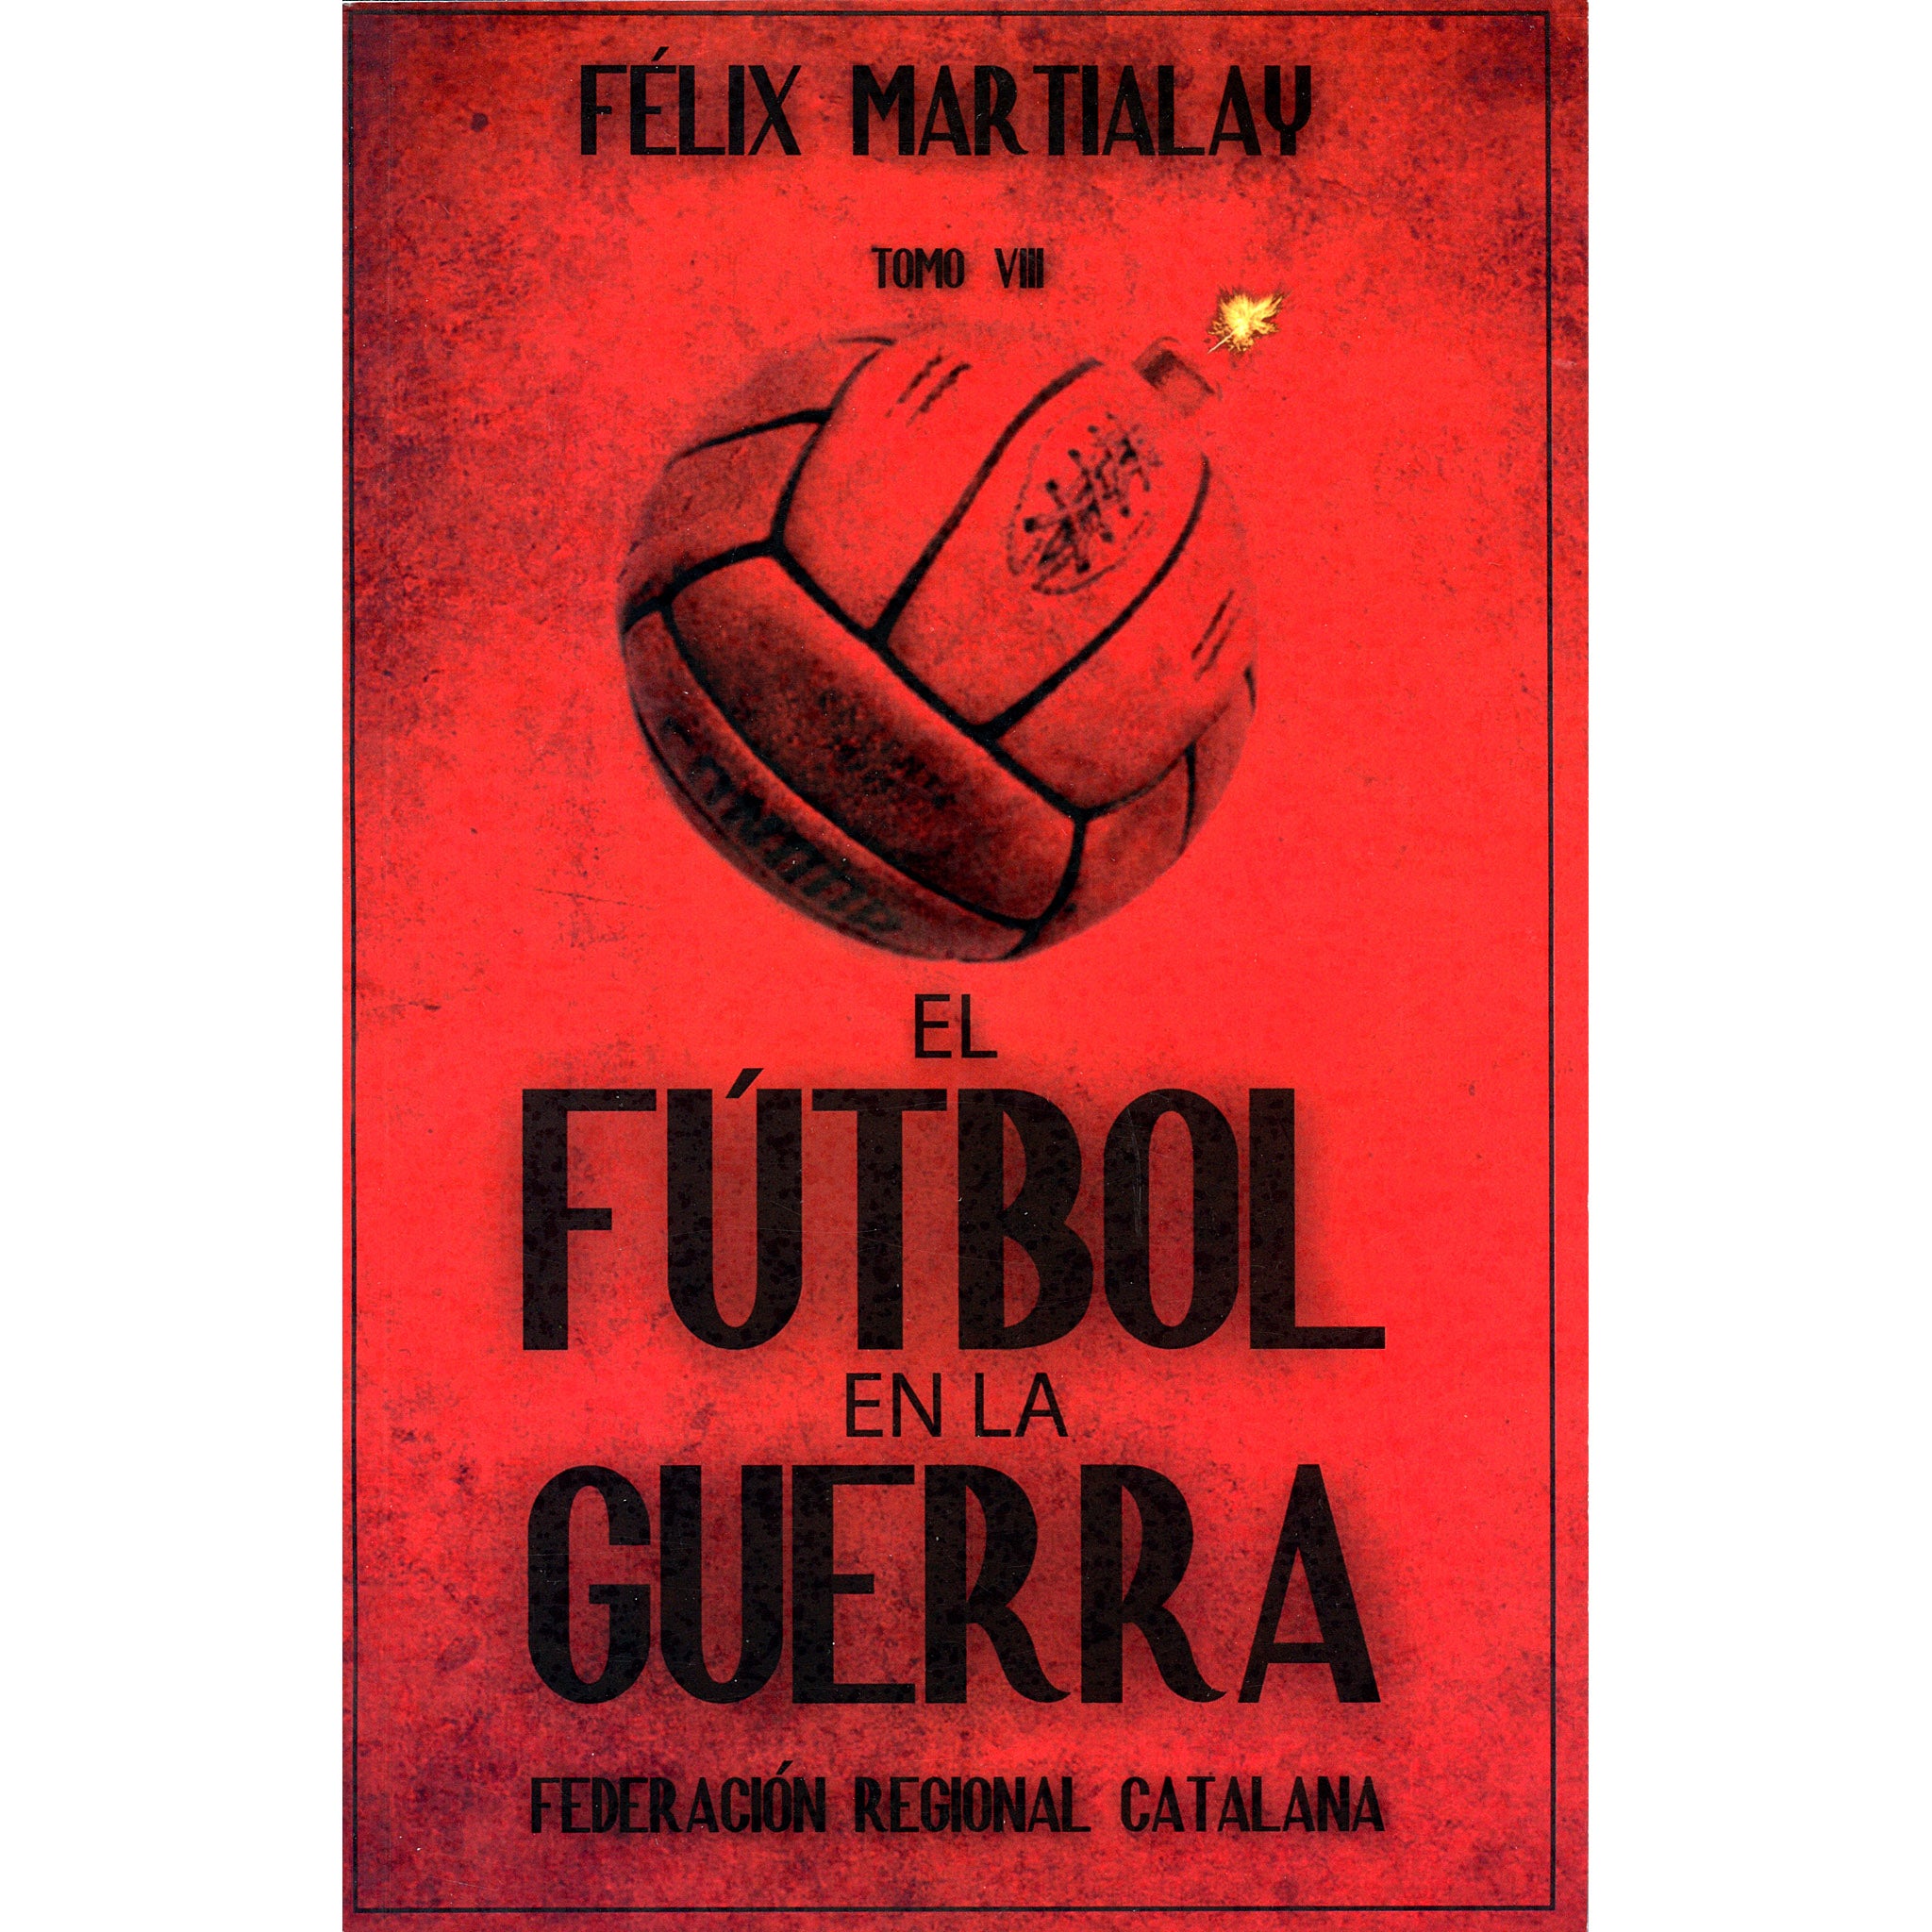 El Futbol en la Guerra Tomo VIII – Federacion Regional Catalana (Spanish Civil War History Volume 8)